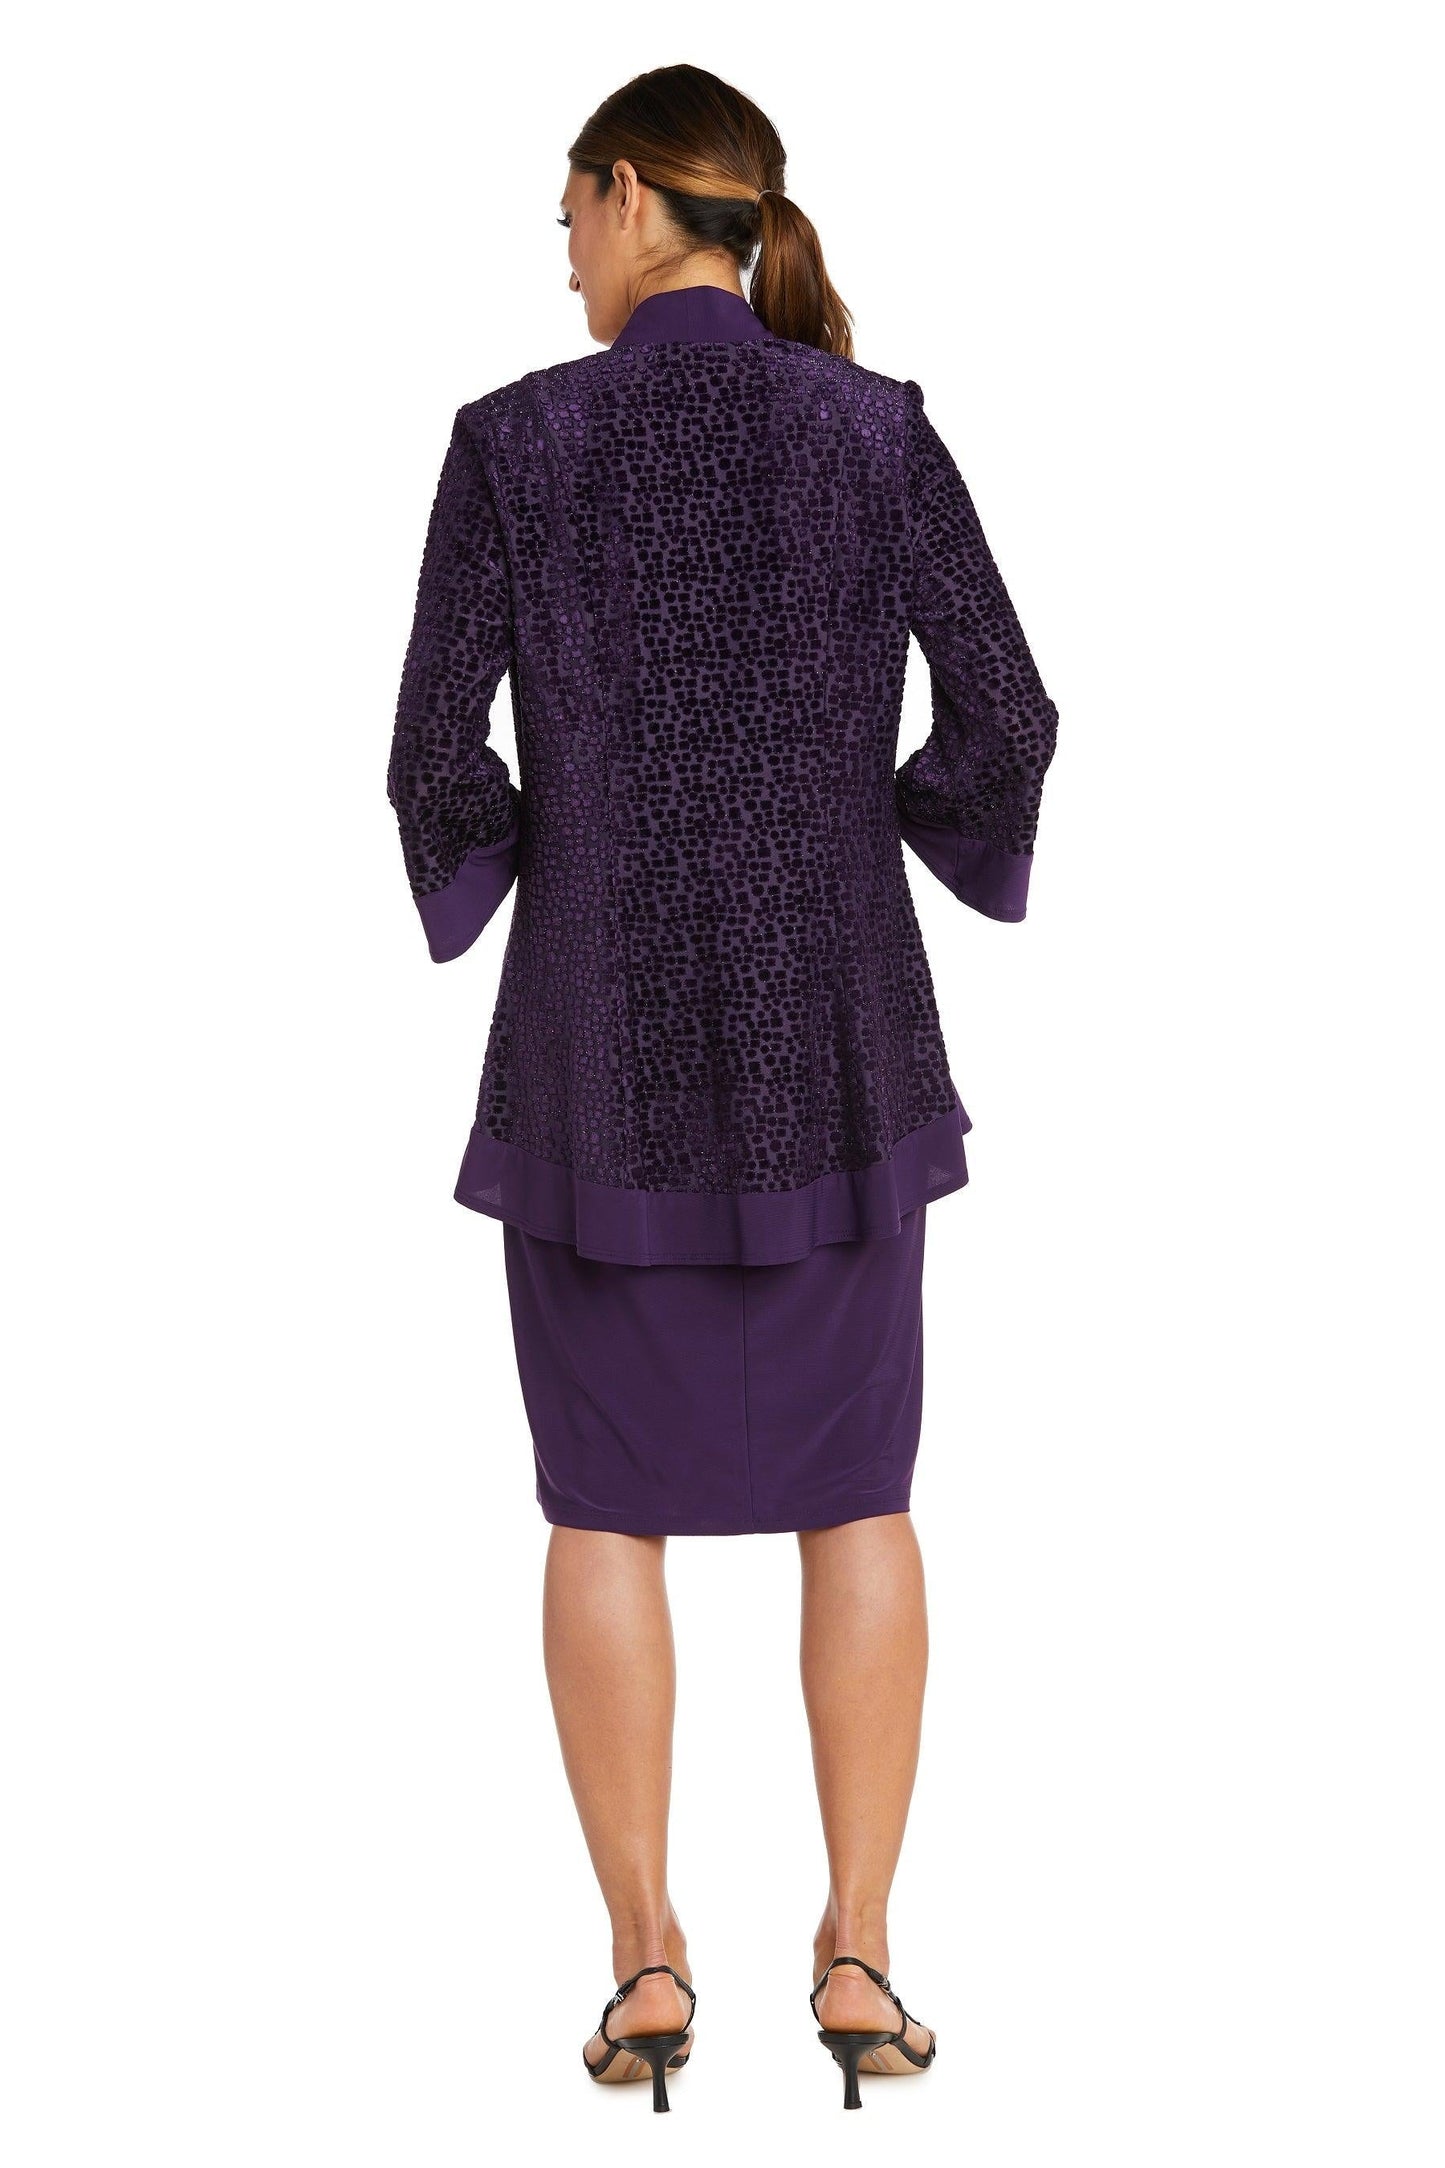 R&M Richards Short Sleeveless Jacket Dress 7597 - The Dress Outlet